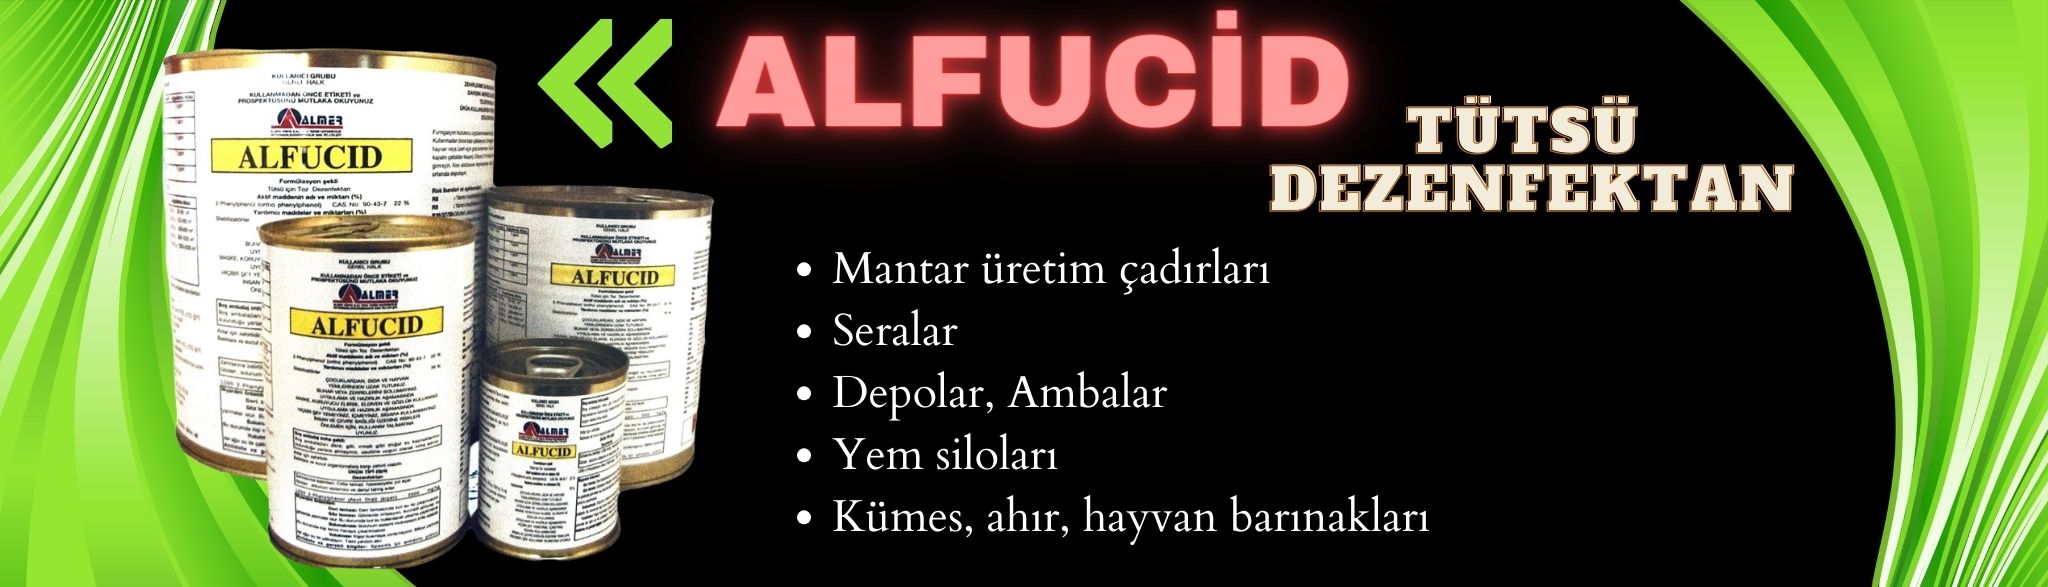 Alfucid banner